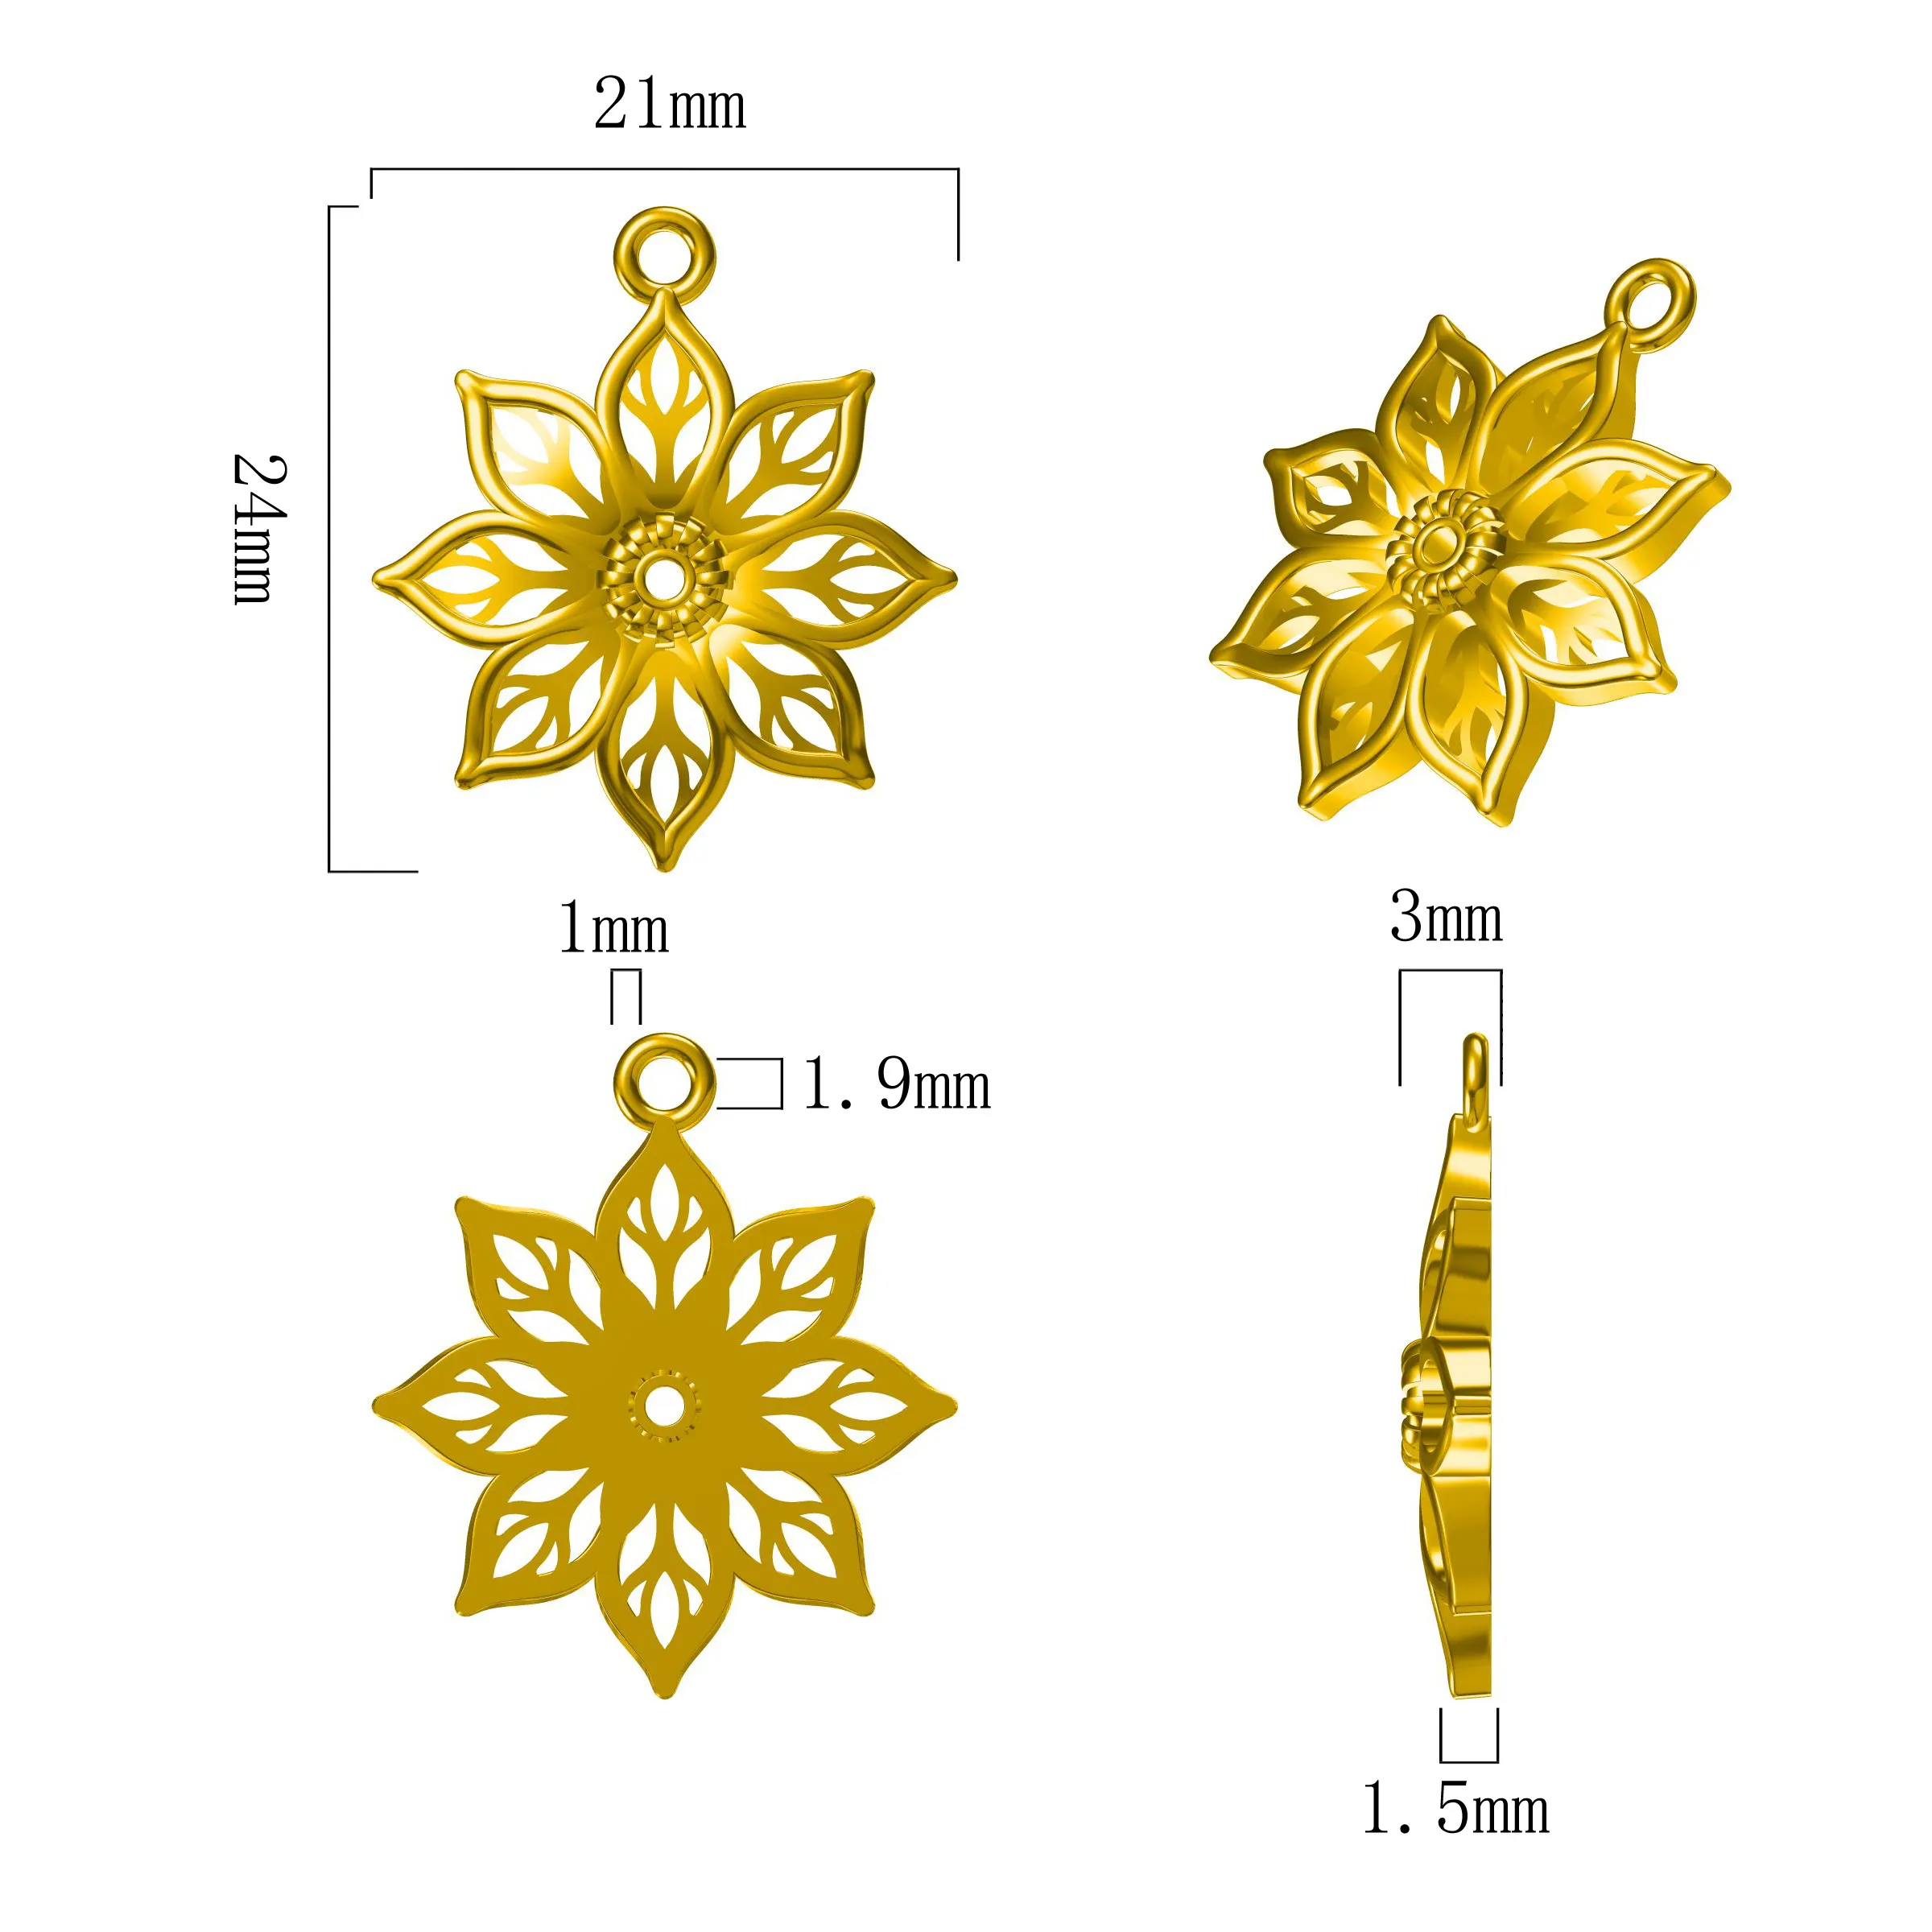 Liontin mode bunga berongga & pesona perhiasan Barat pribadi dengan jimat desainer pelapisan emas 18K terbuat dari kuningan